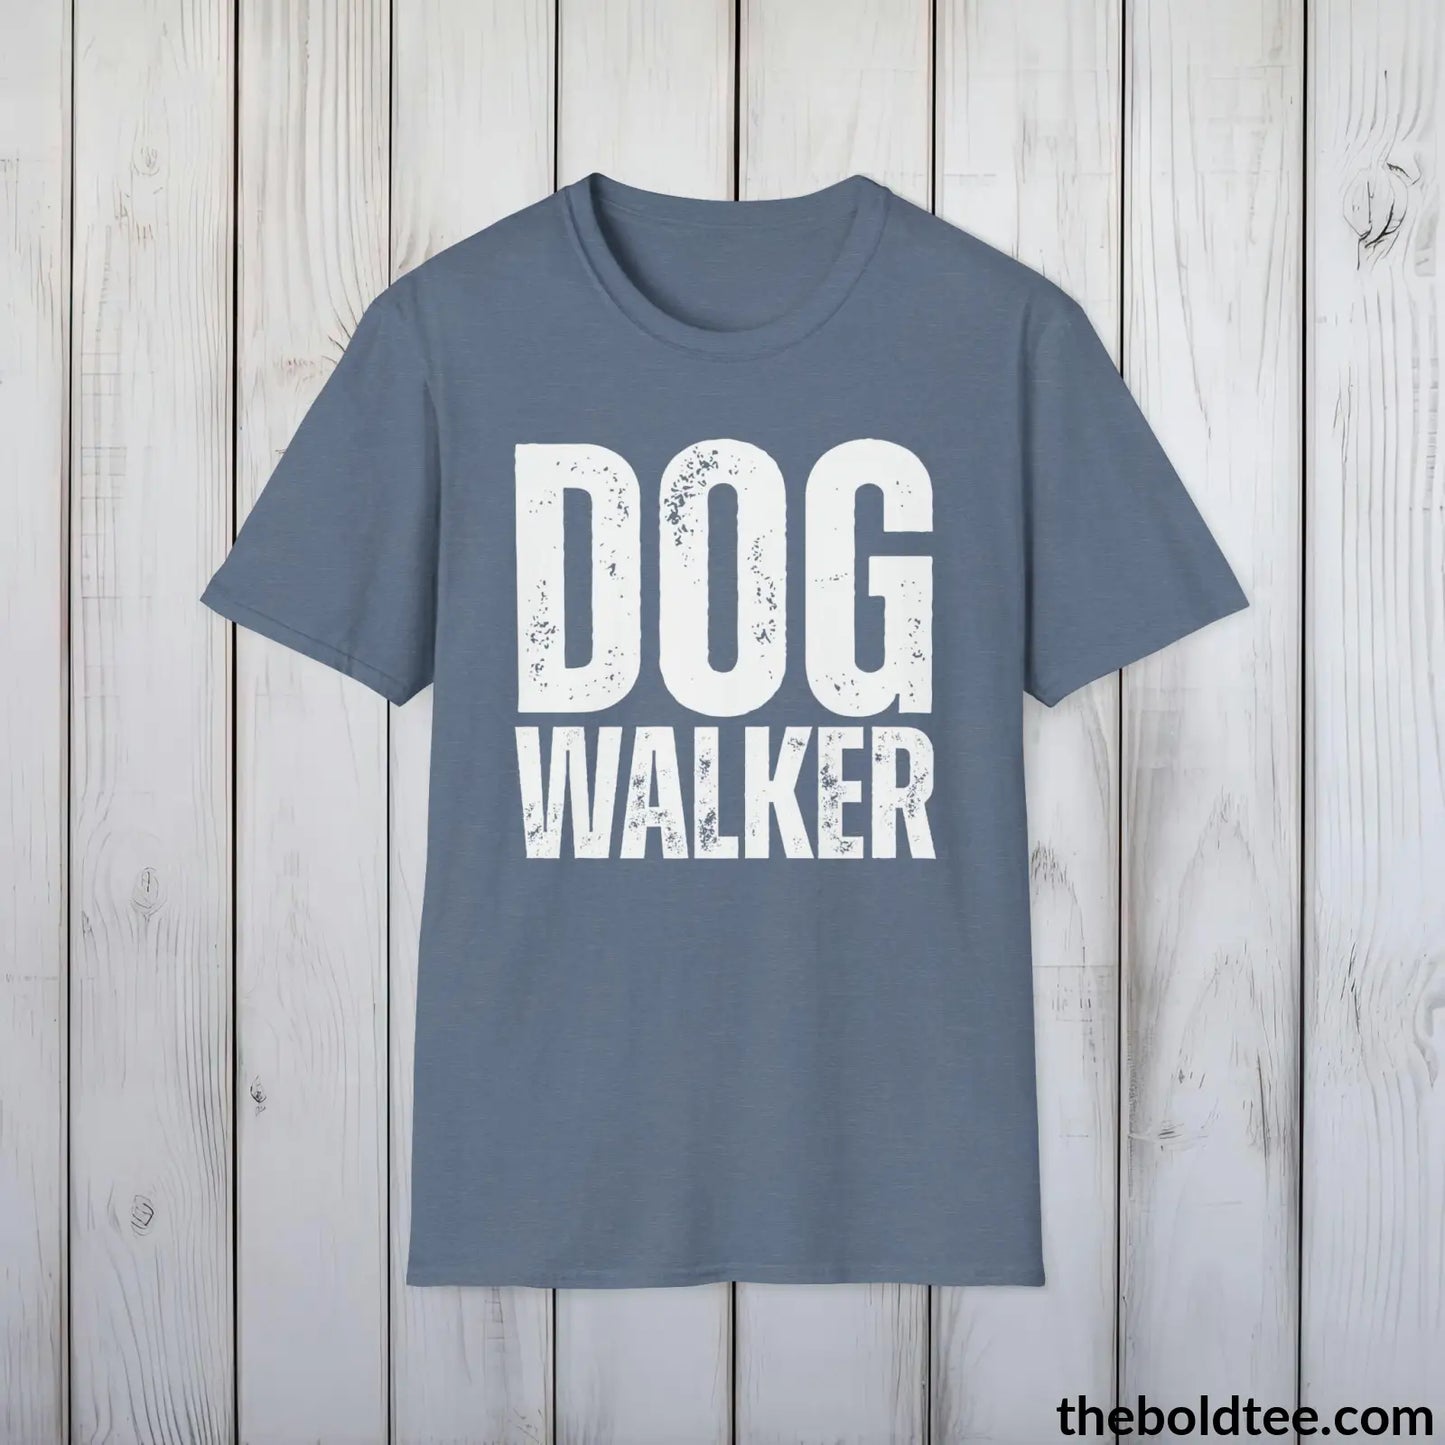 Dog Walker T-Shirt - Pet Owner Everyday Shirt - Funny Dog Lover Shirt - Pet Puppy Lover Shirt Gift - Comfort in 9 Colors